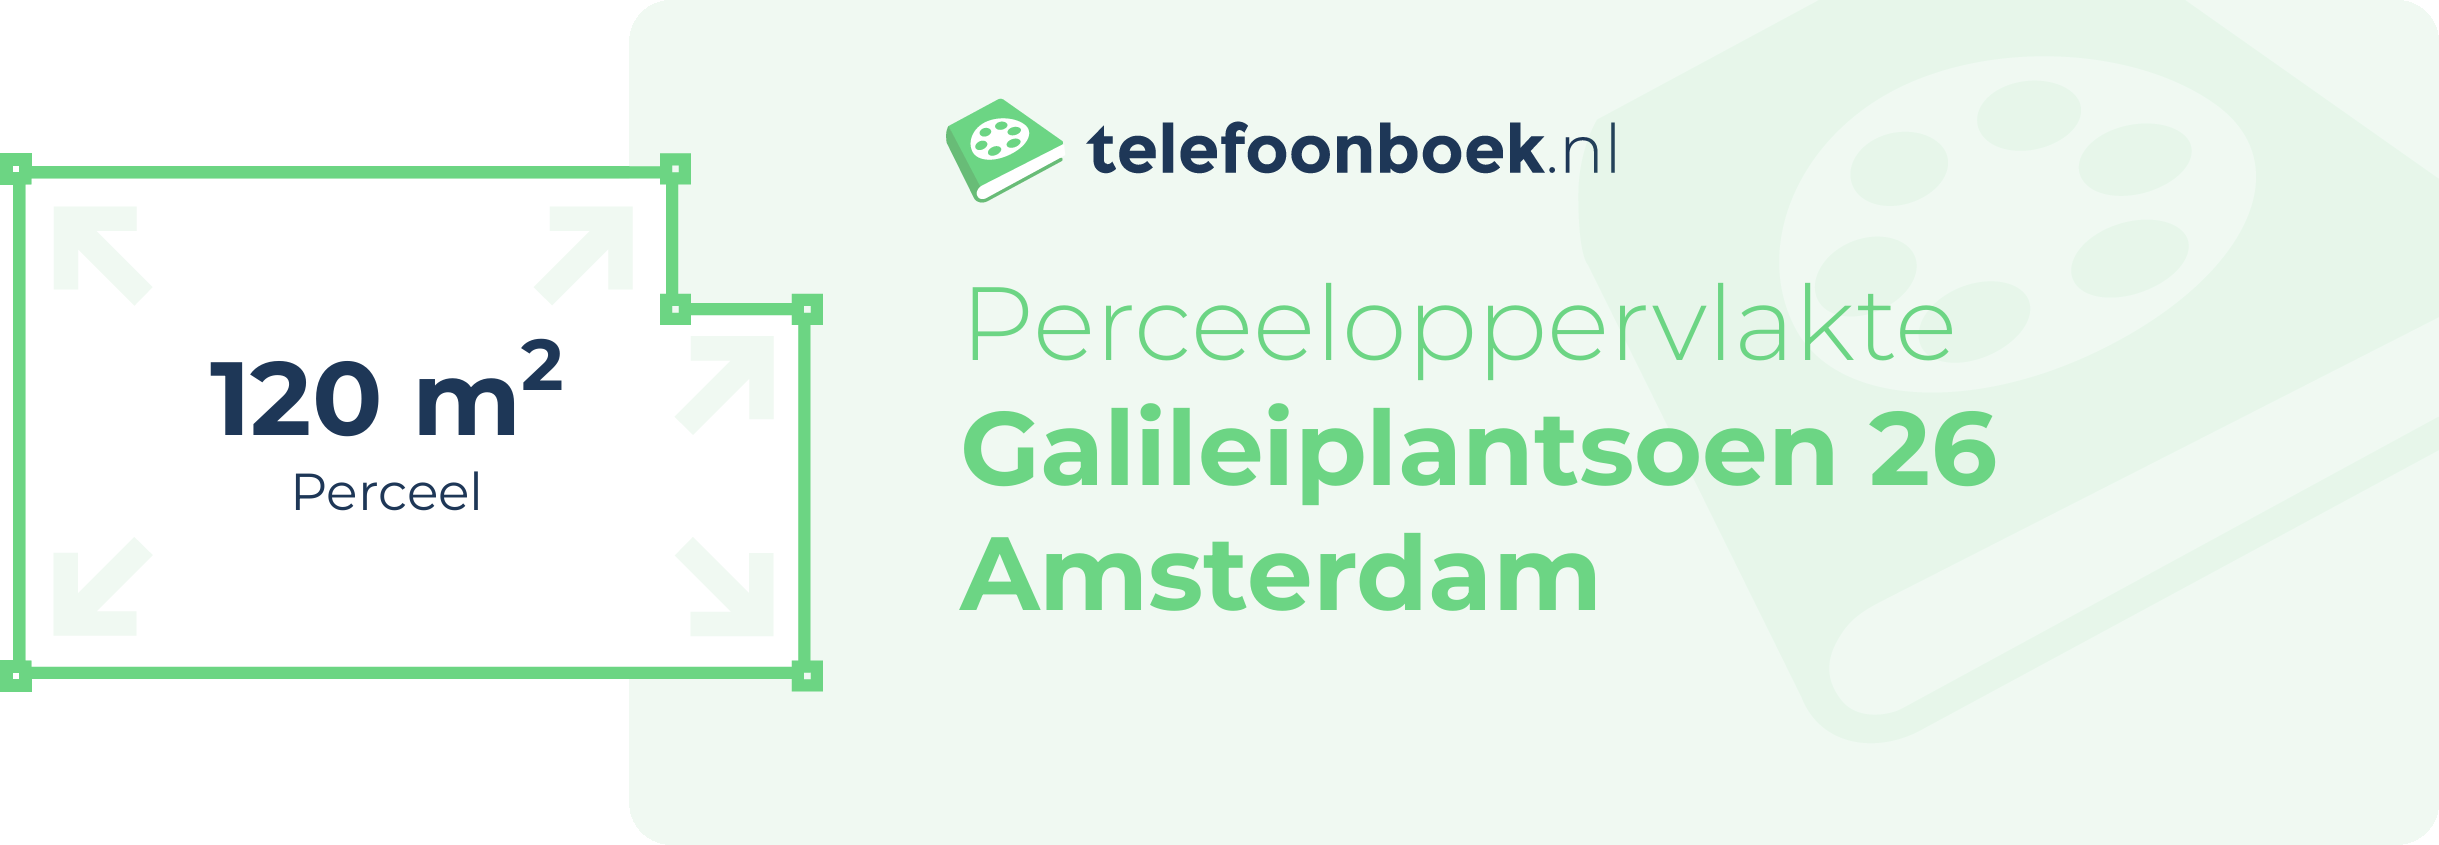 Perceeloppervlakte Galileiplantsoen 26 Amsterdam